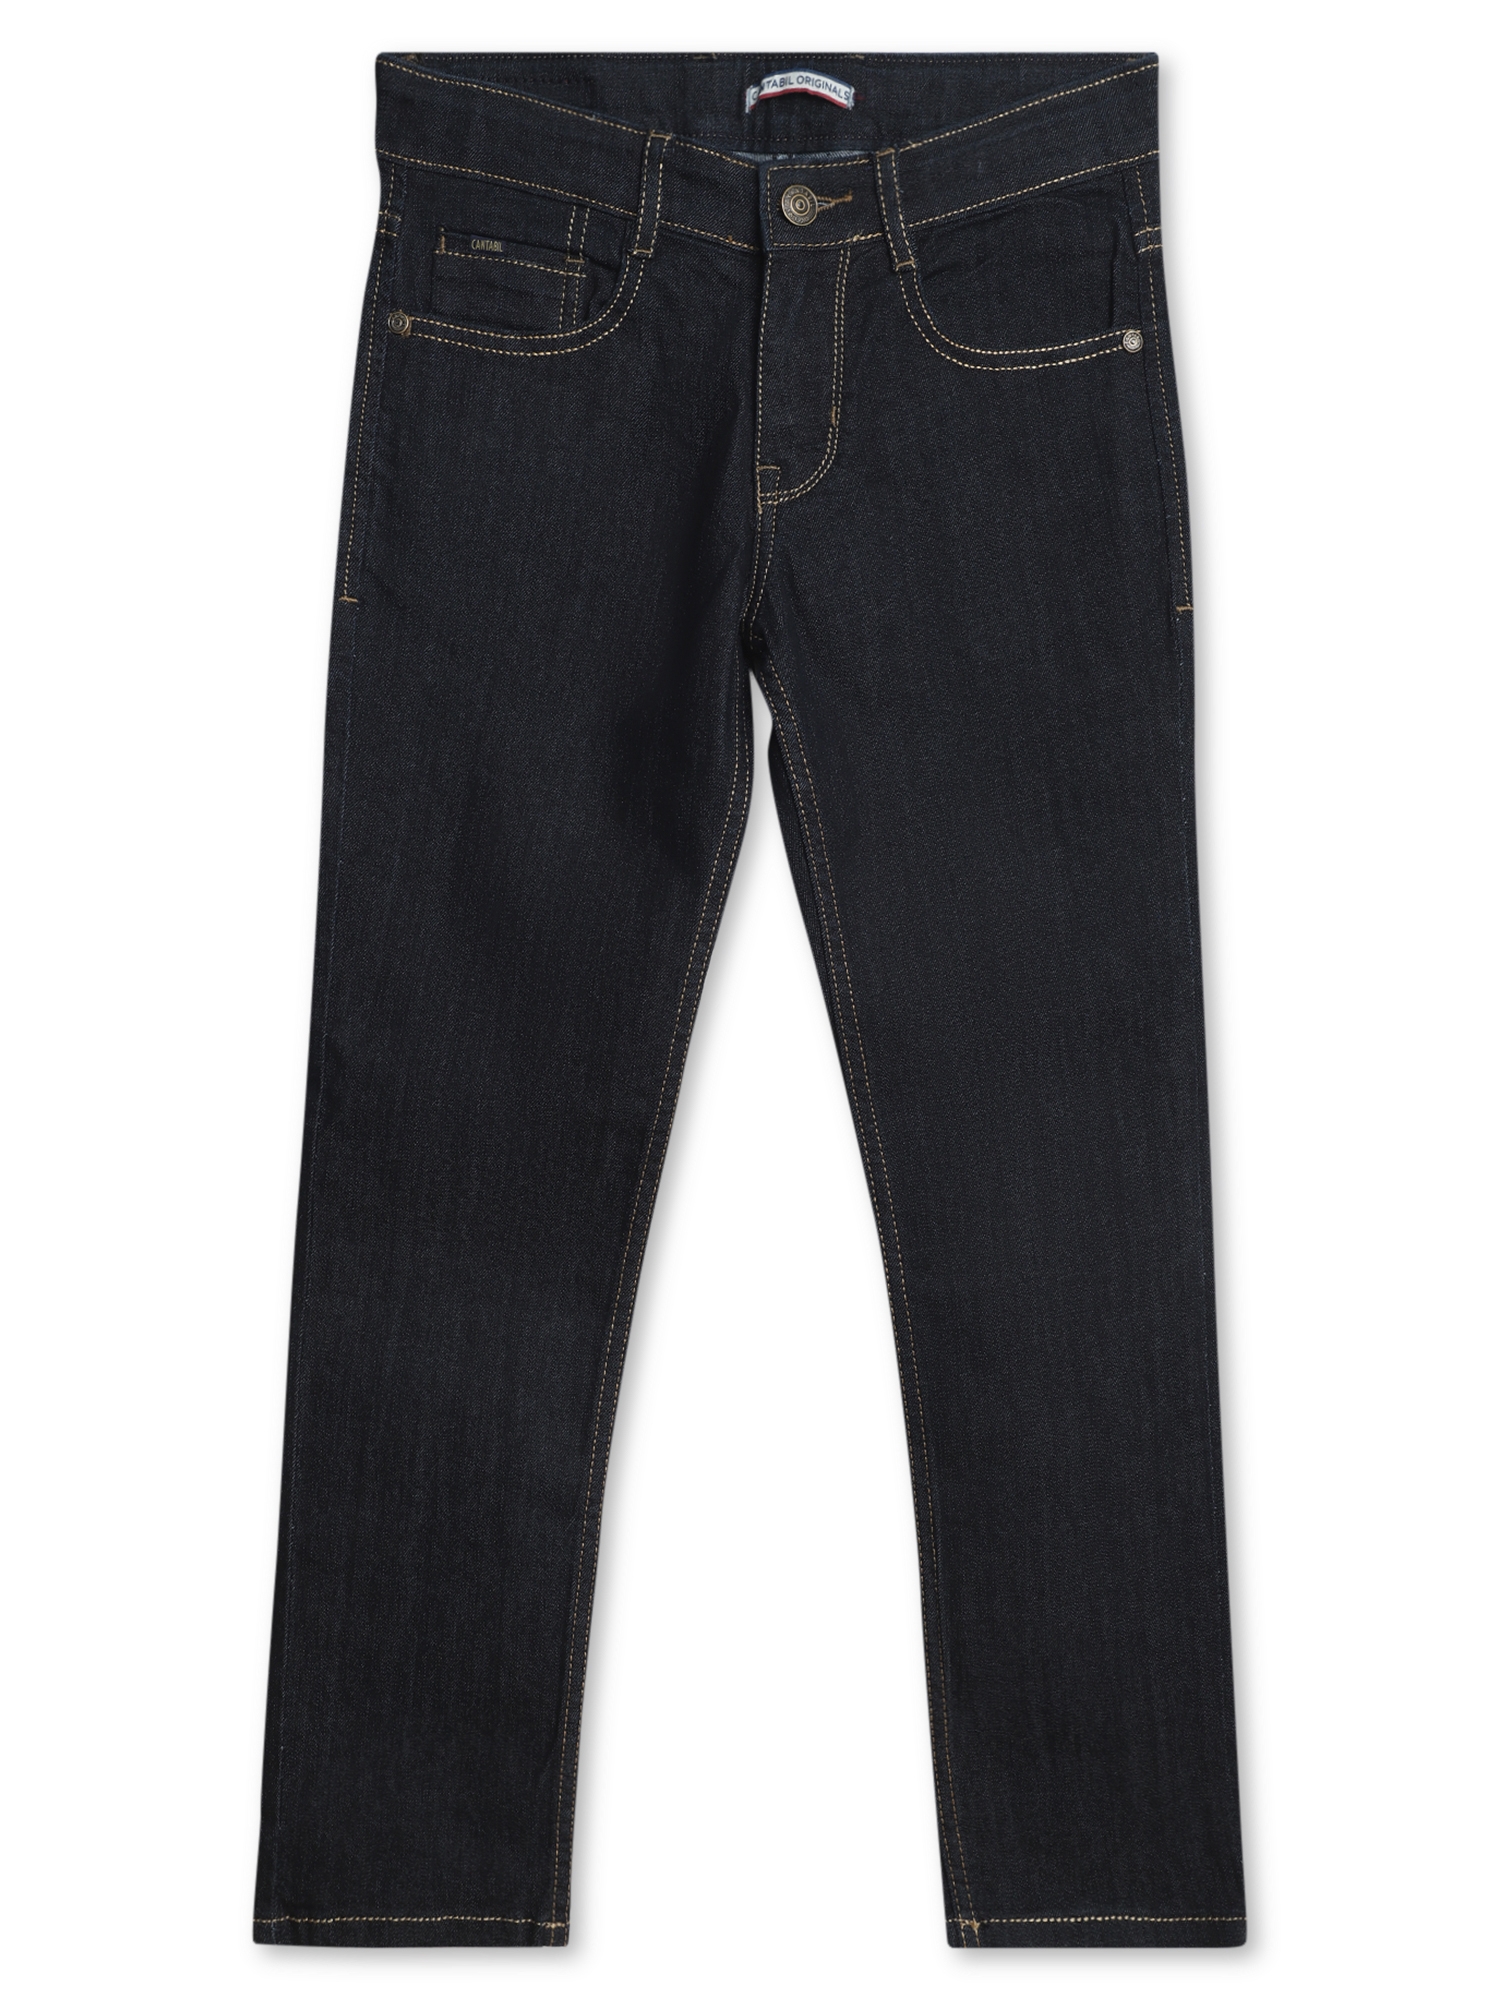 Buy Cantabil Men Dark Grey Jeans online